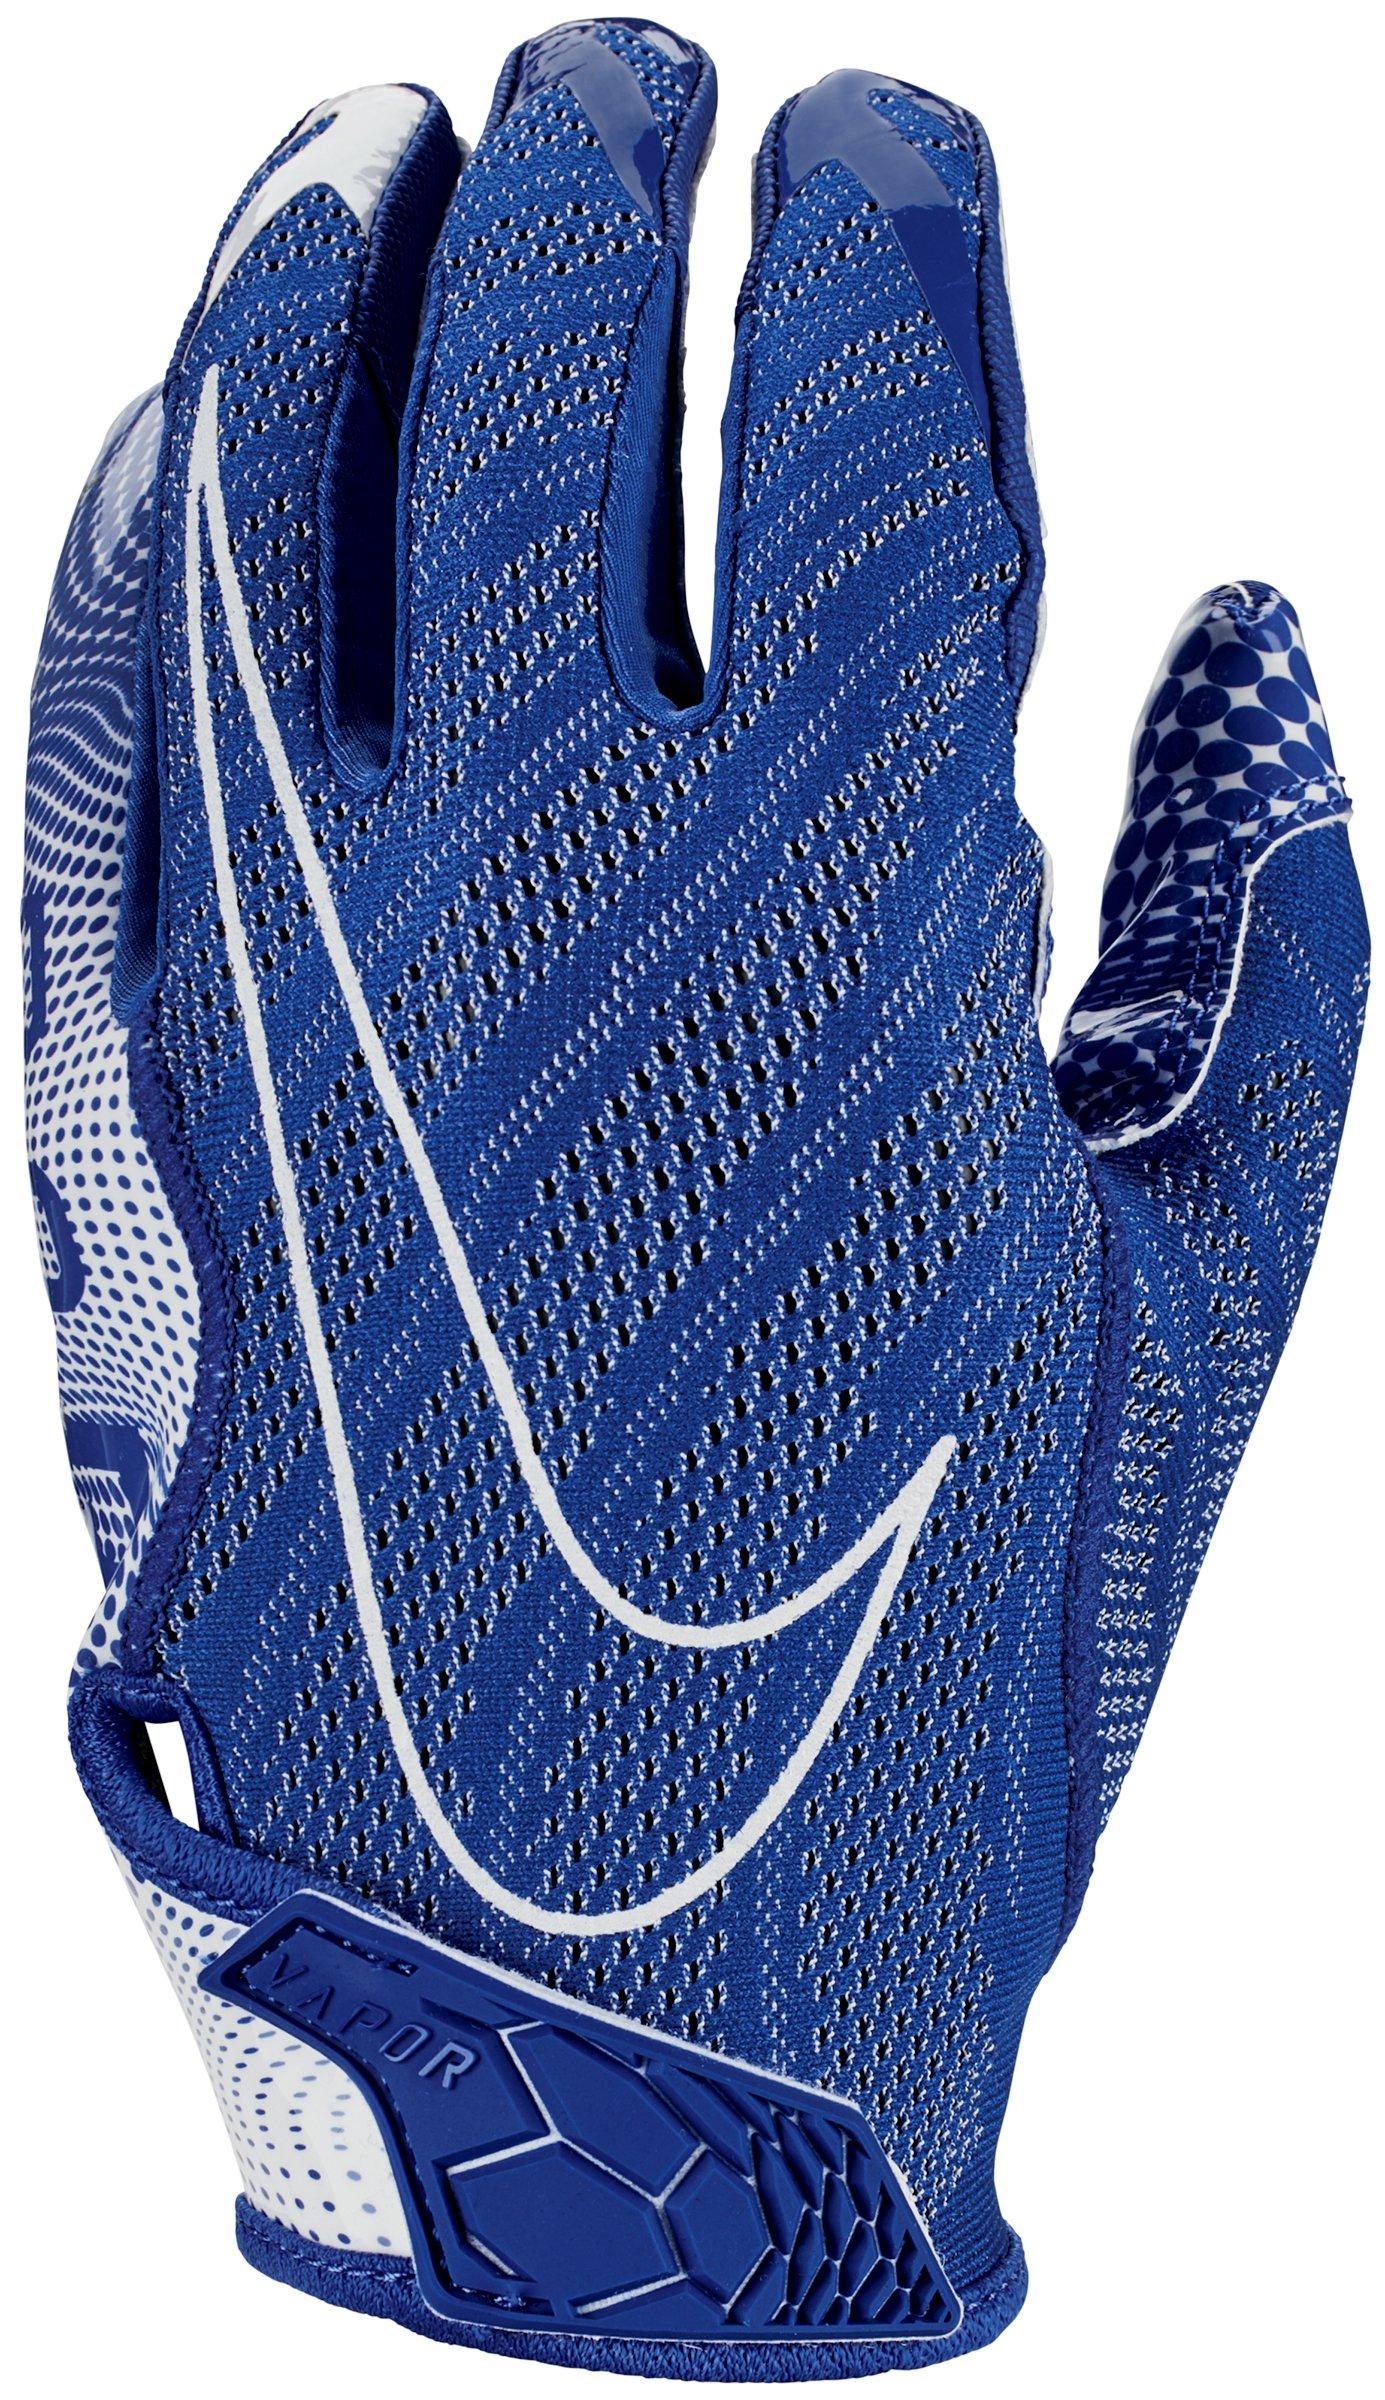 Nike Adult Vapor Knit 3.0 Football Gloves